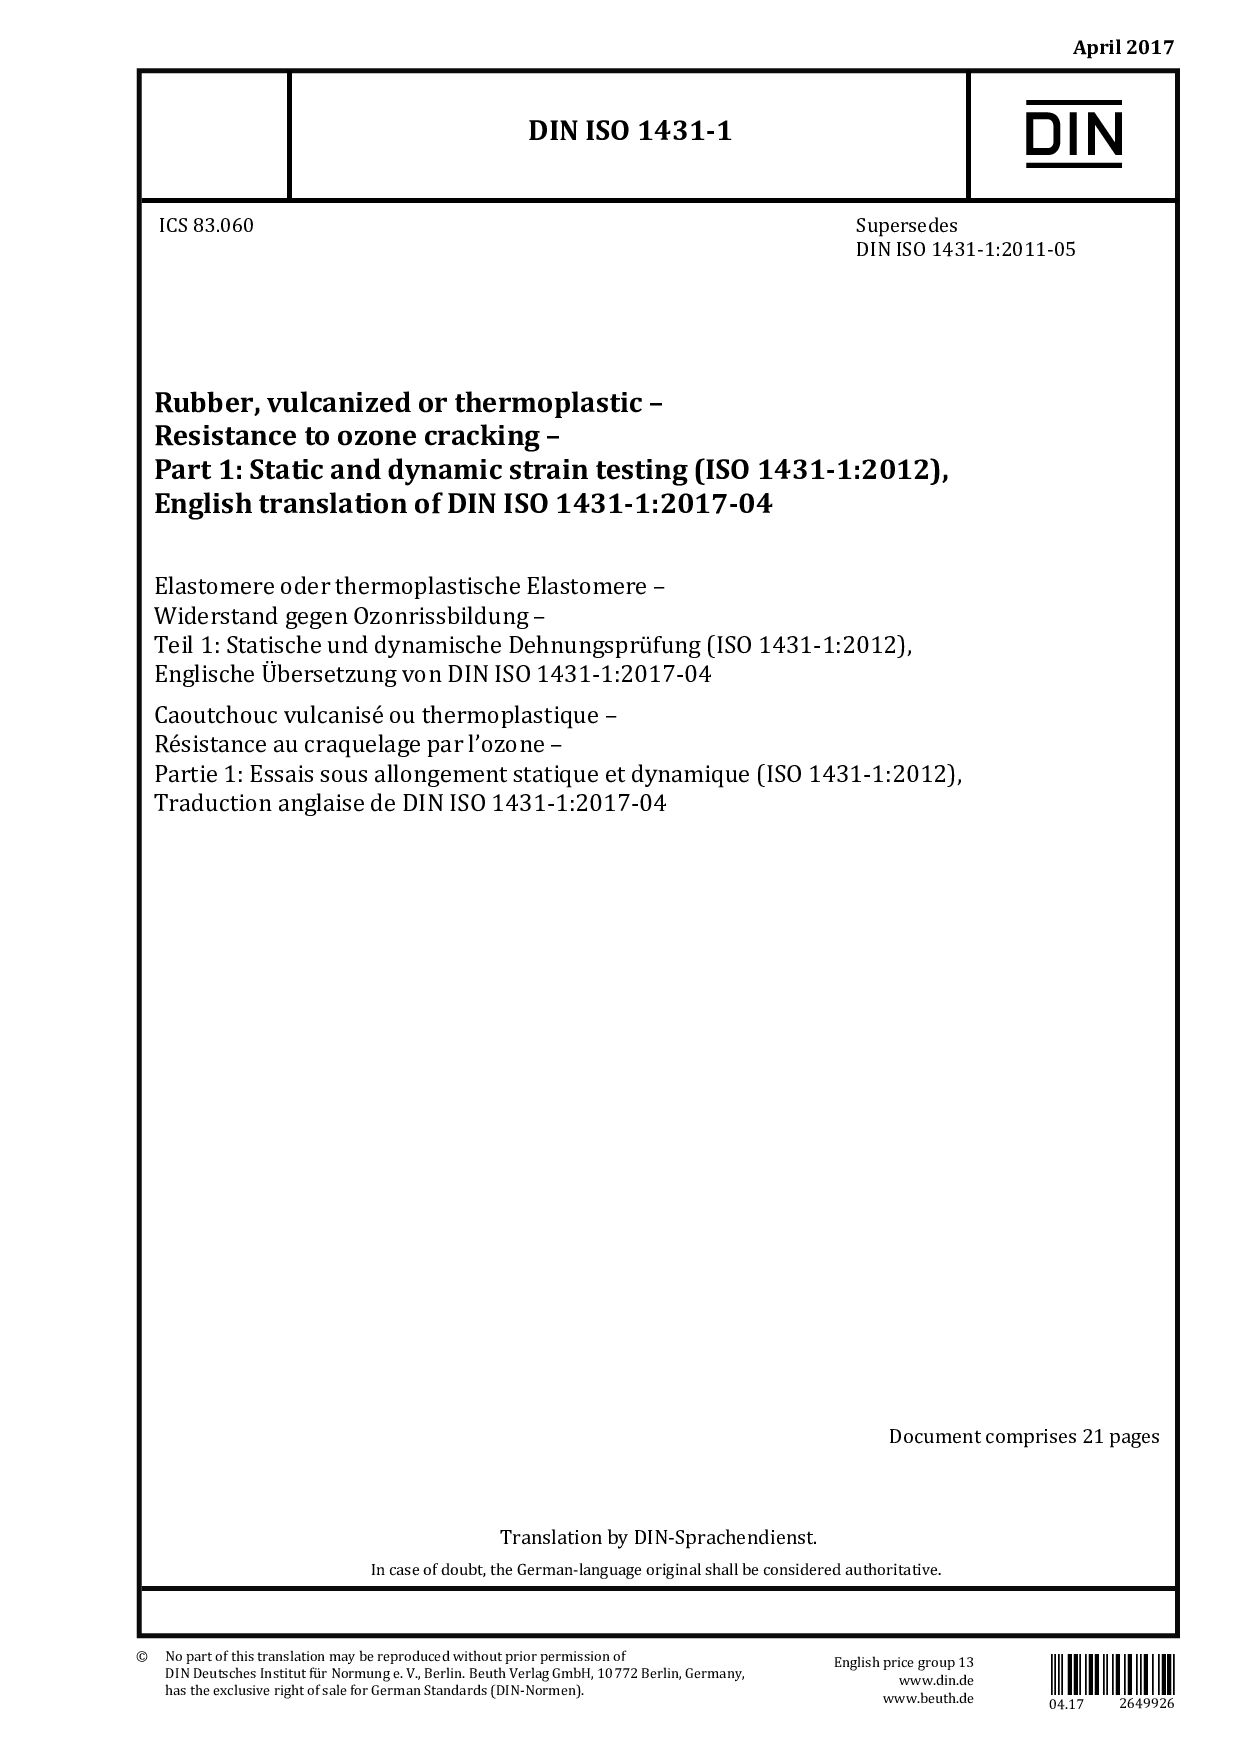 DIN ISO 1431-1-2017